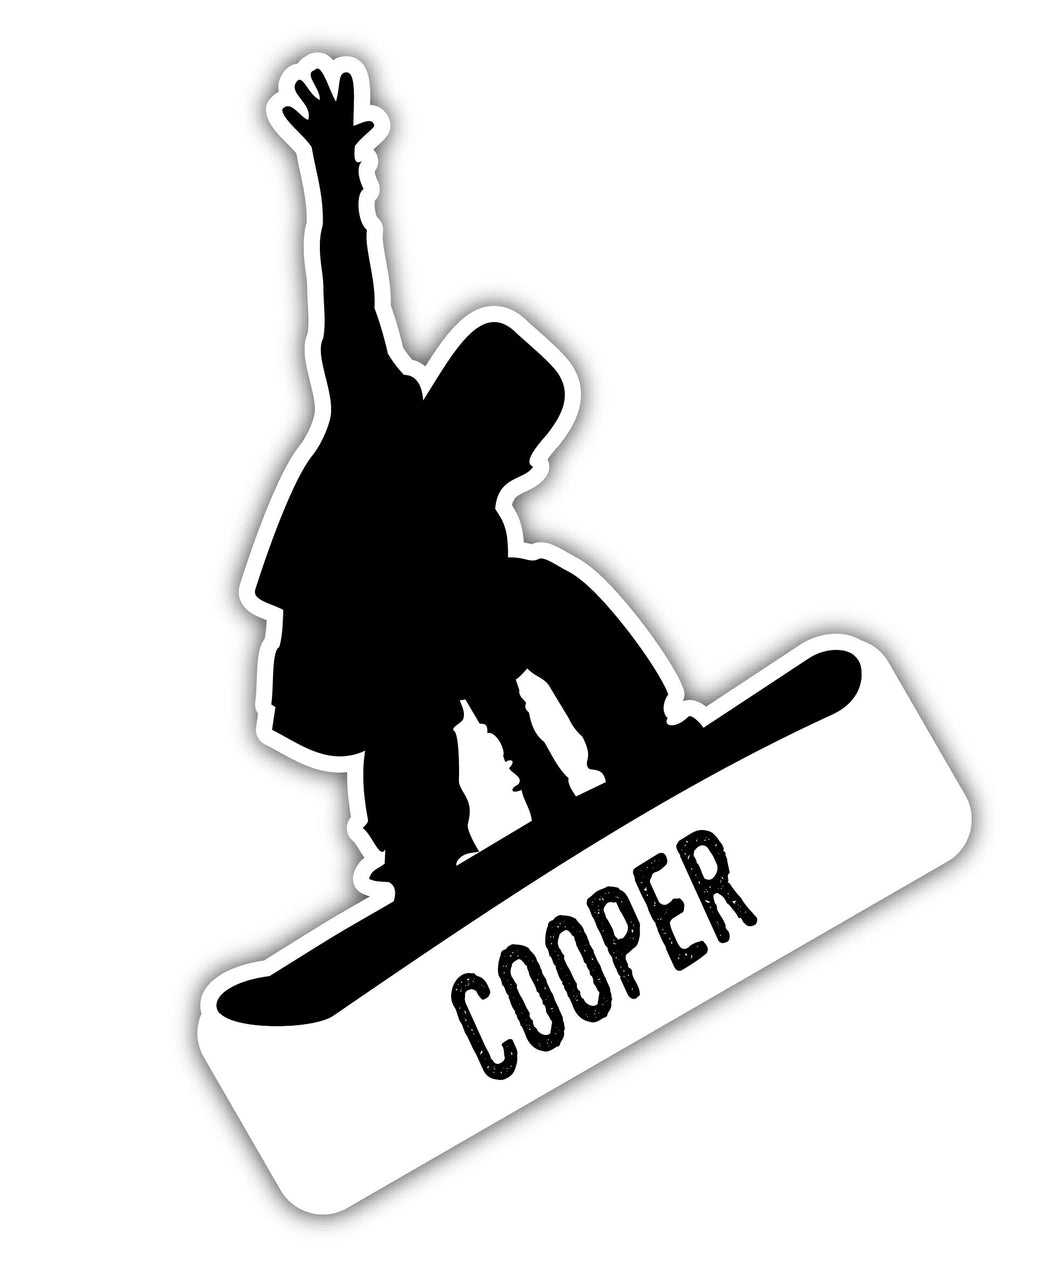 Cooper Colorado Ski Adventures Souvenir Approximately 5 x 2.5-Inch Vinyl Decal Sticker Goggle Design